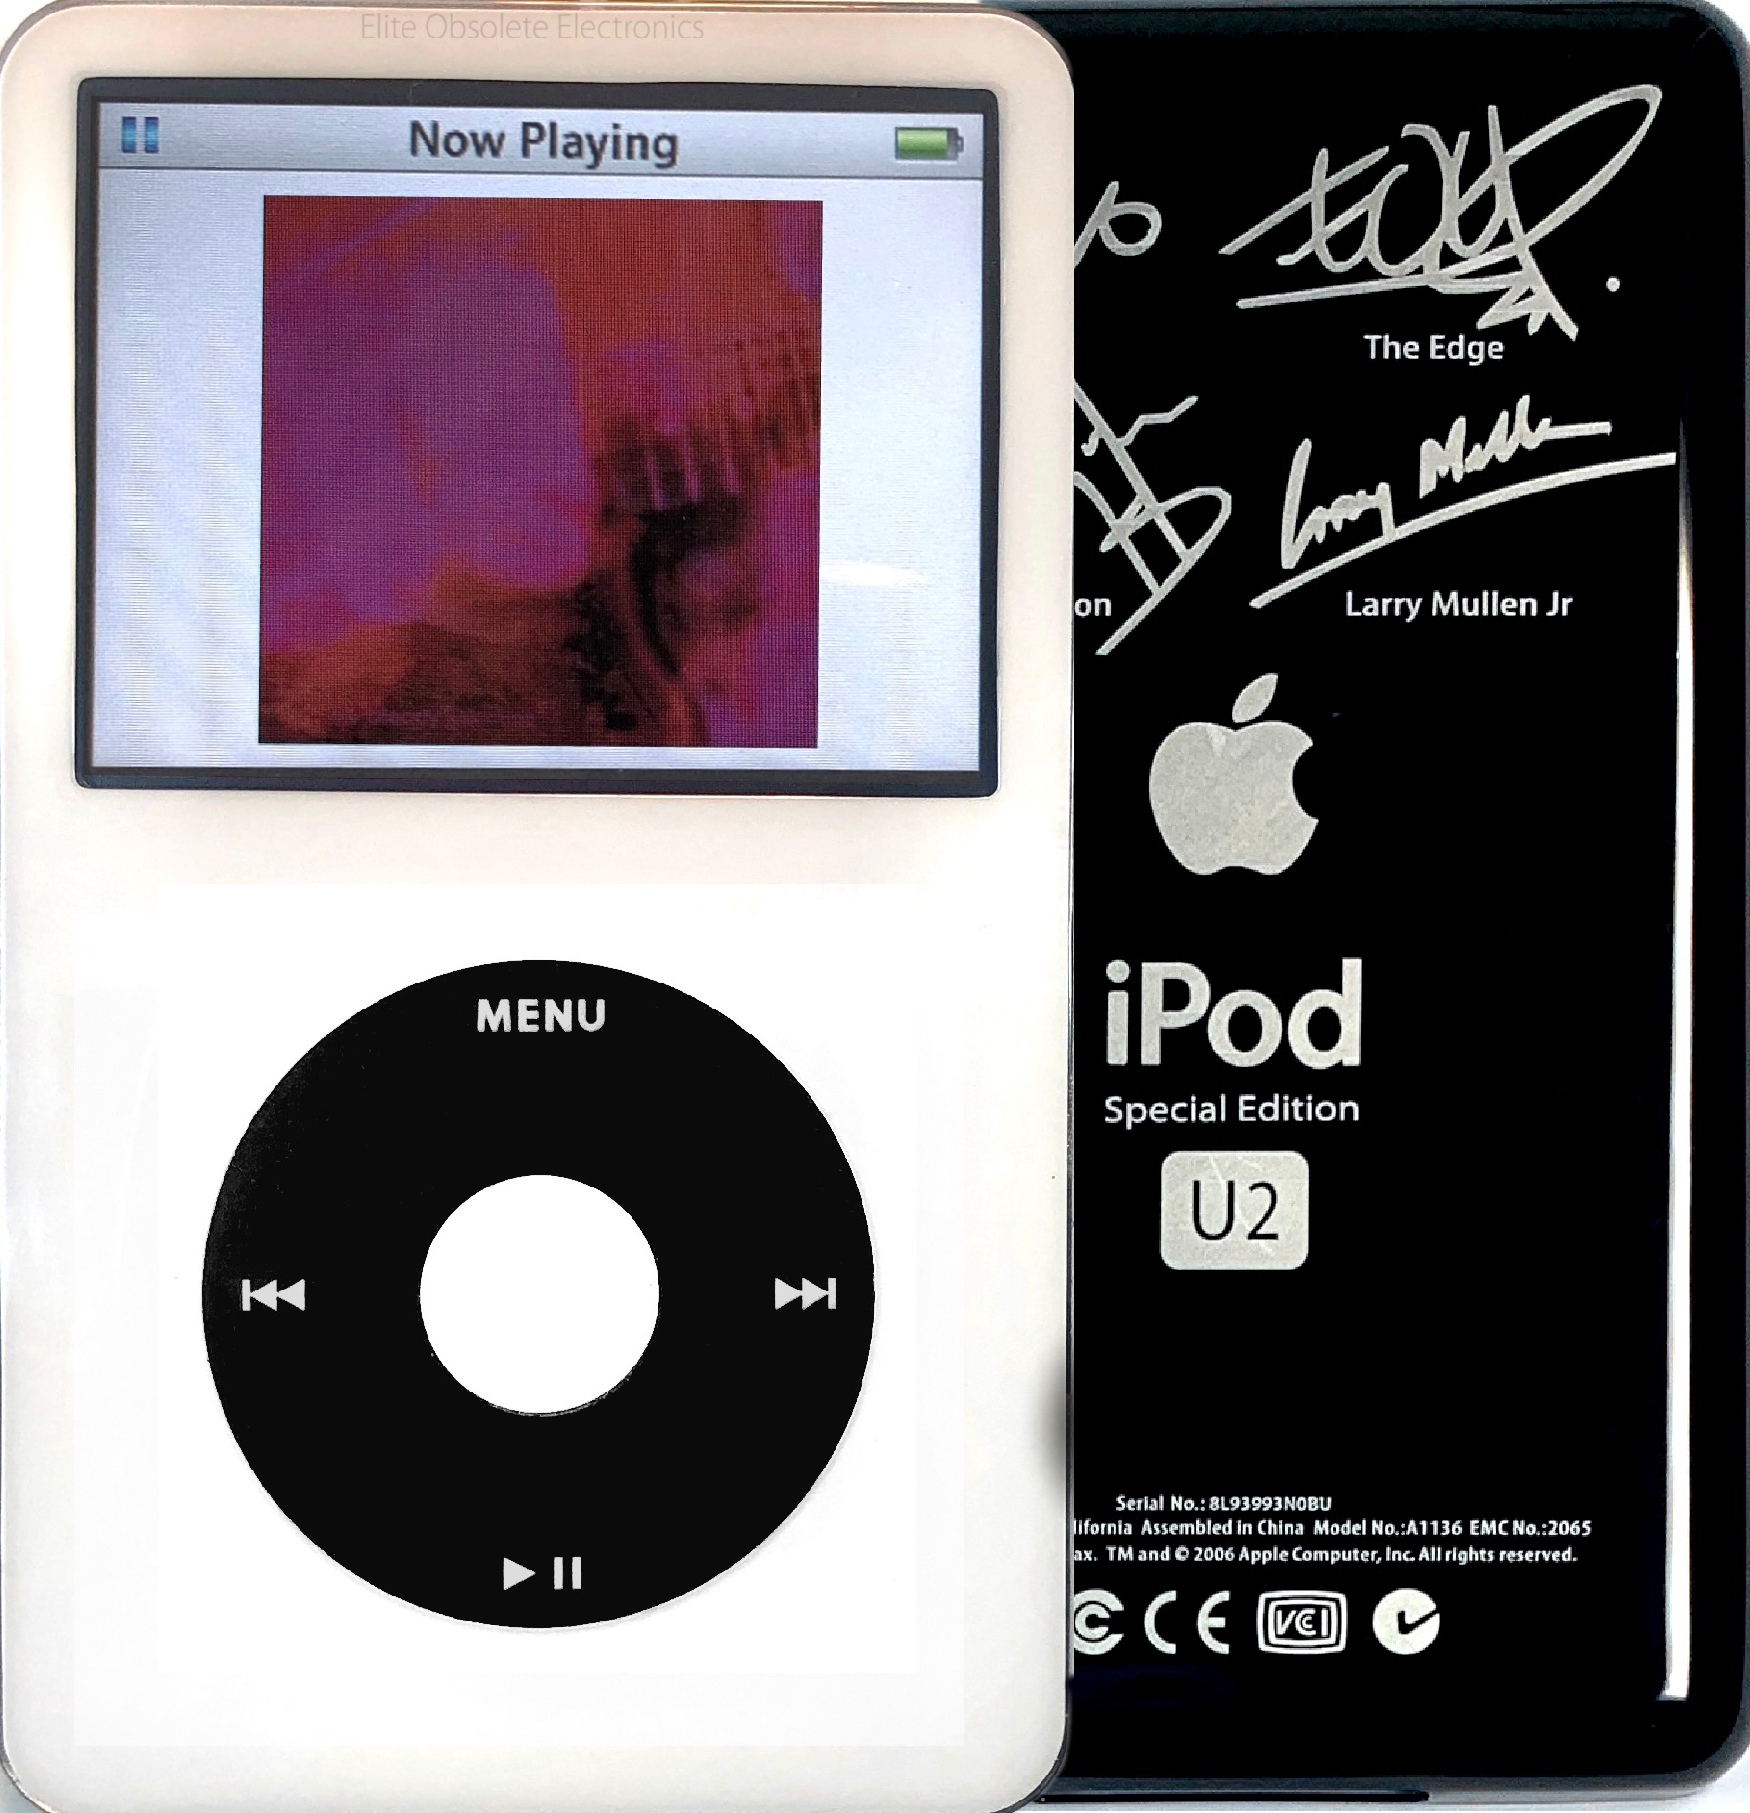 New Apple iPod Video Classic 5th & 5.5 Enhanced White / Black / White (U2 Special Edition Black)